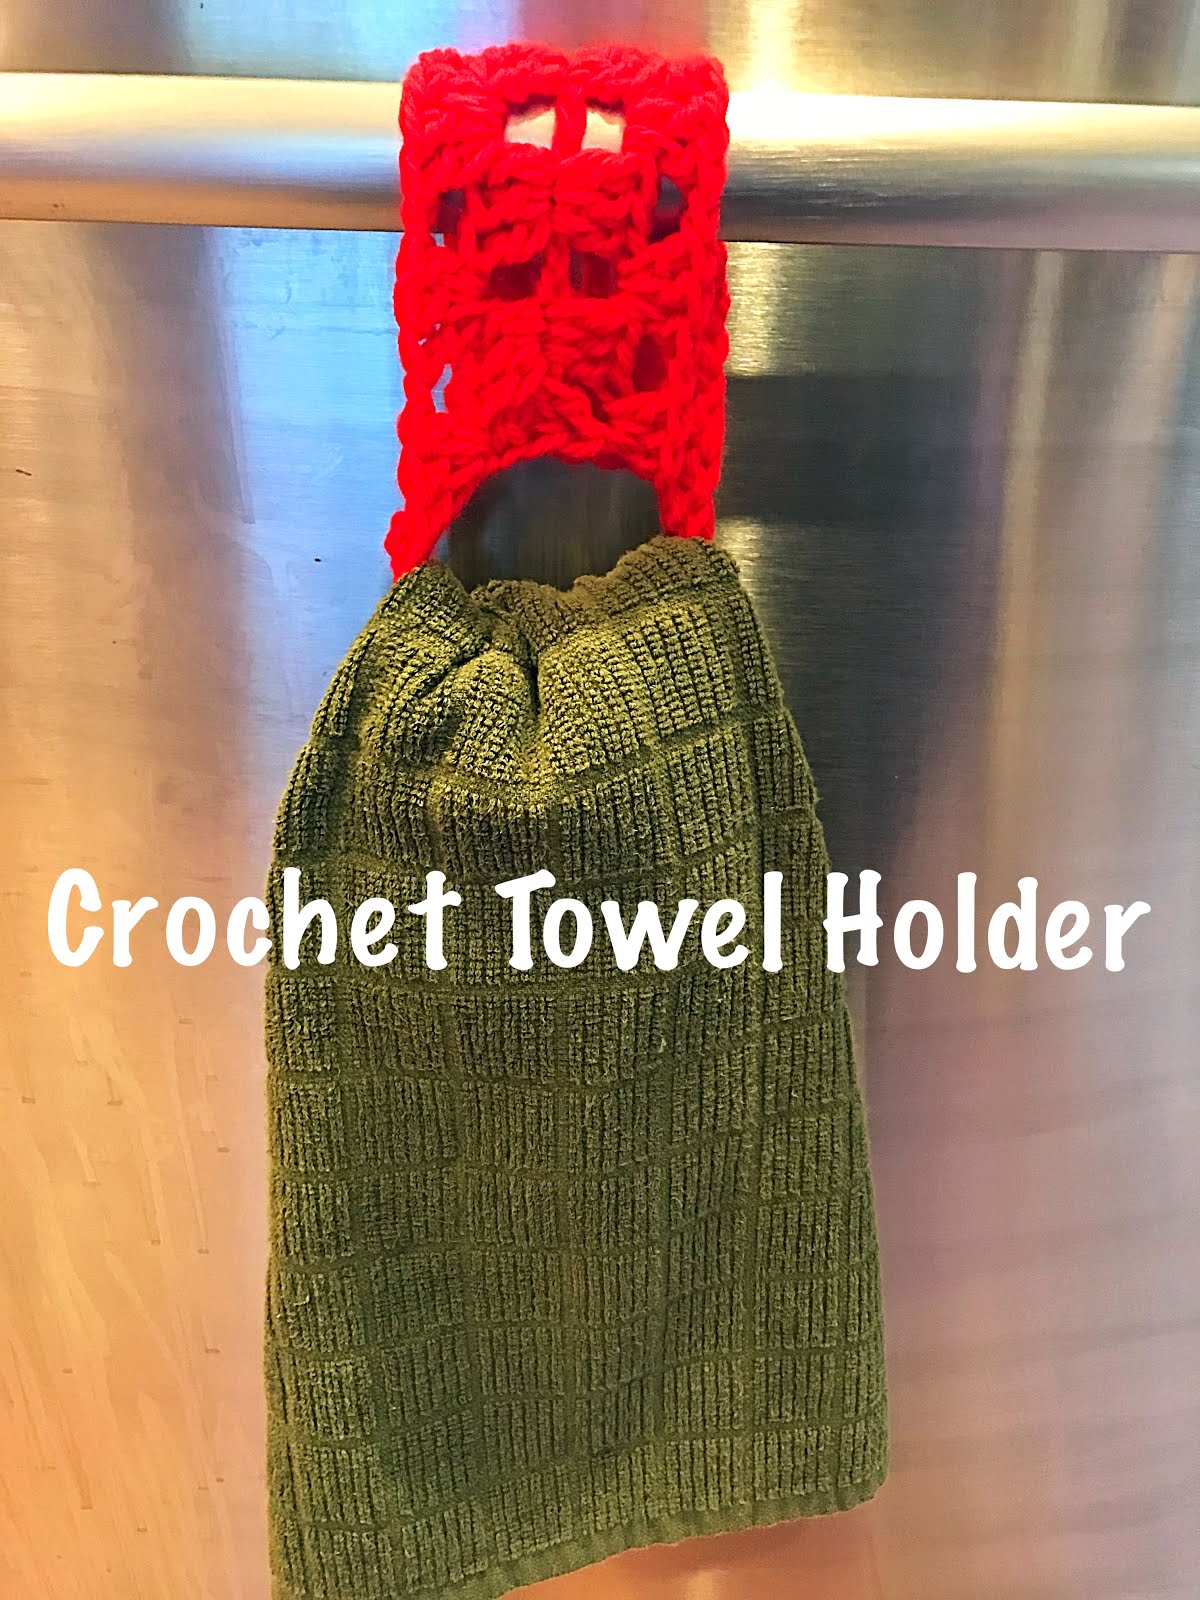 Crochet Towel Holder | Julie's Creative Lifestyle